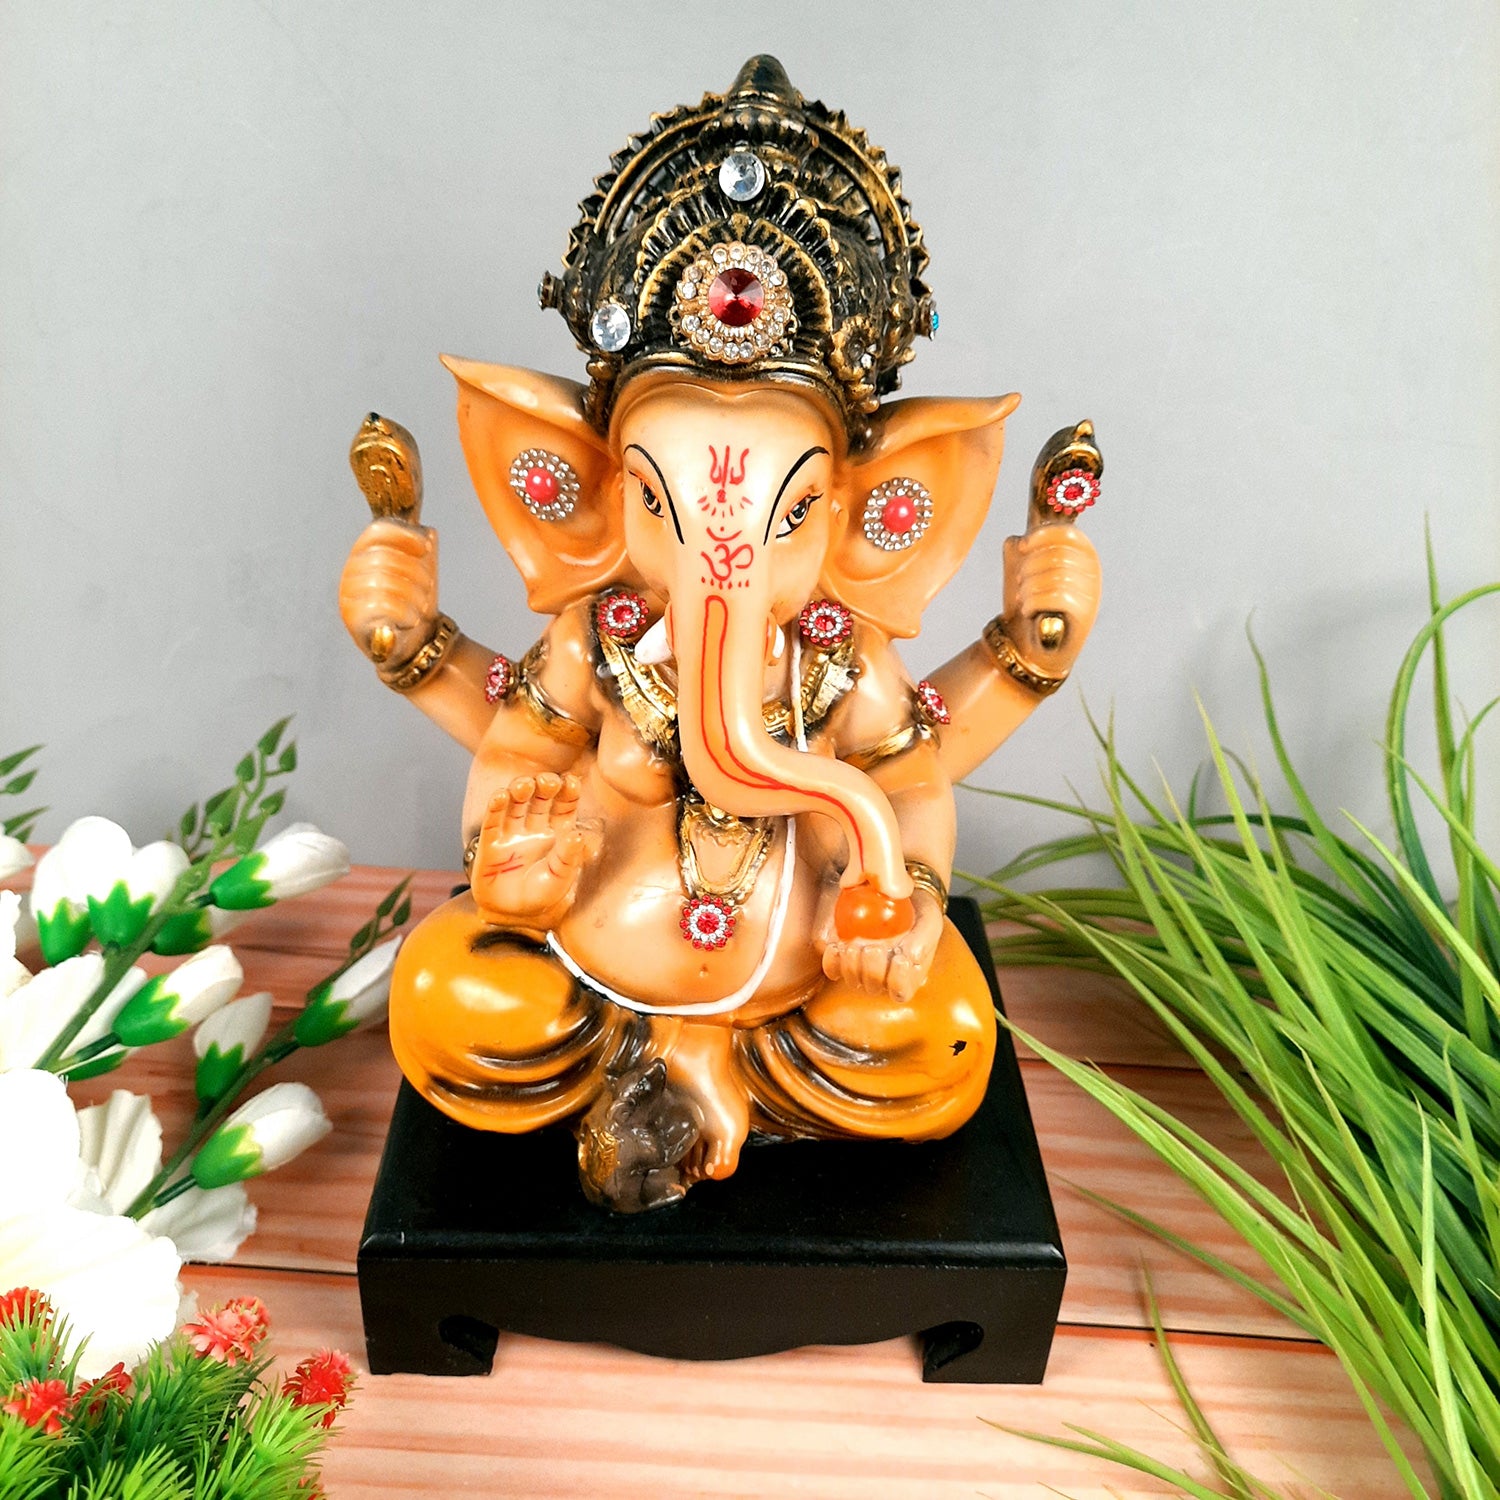 StatueStudio Ganesha Statue on Lotus Showpiece Temple Décor Ganpati Idol  Gift Item Lord Ganesh Murti for Car Dashboard Gift item for Diwali Pooja  and Home Décor Decorative Showpiece - 10.1 cm Price